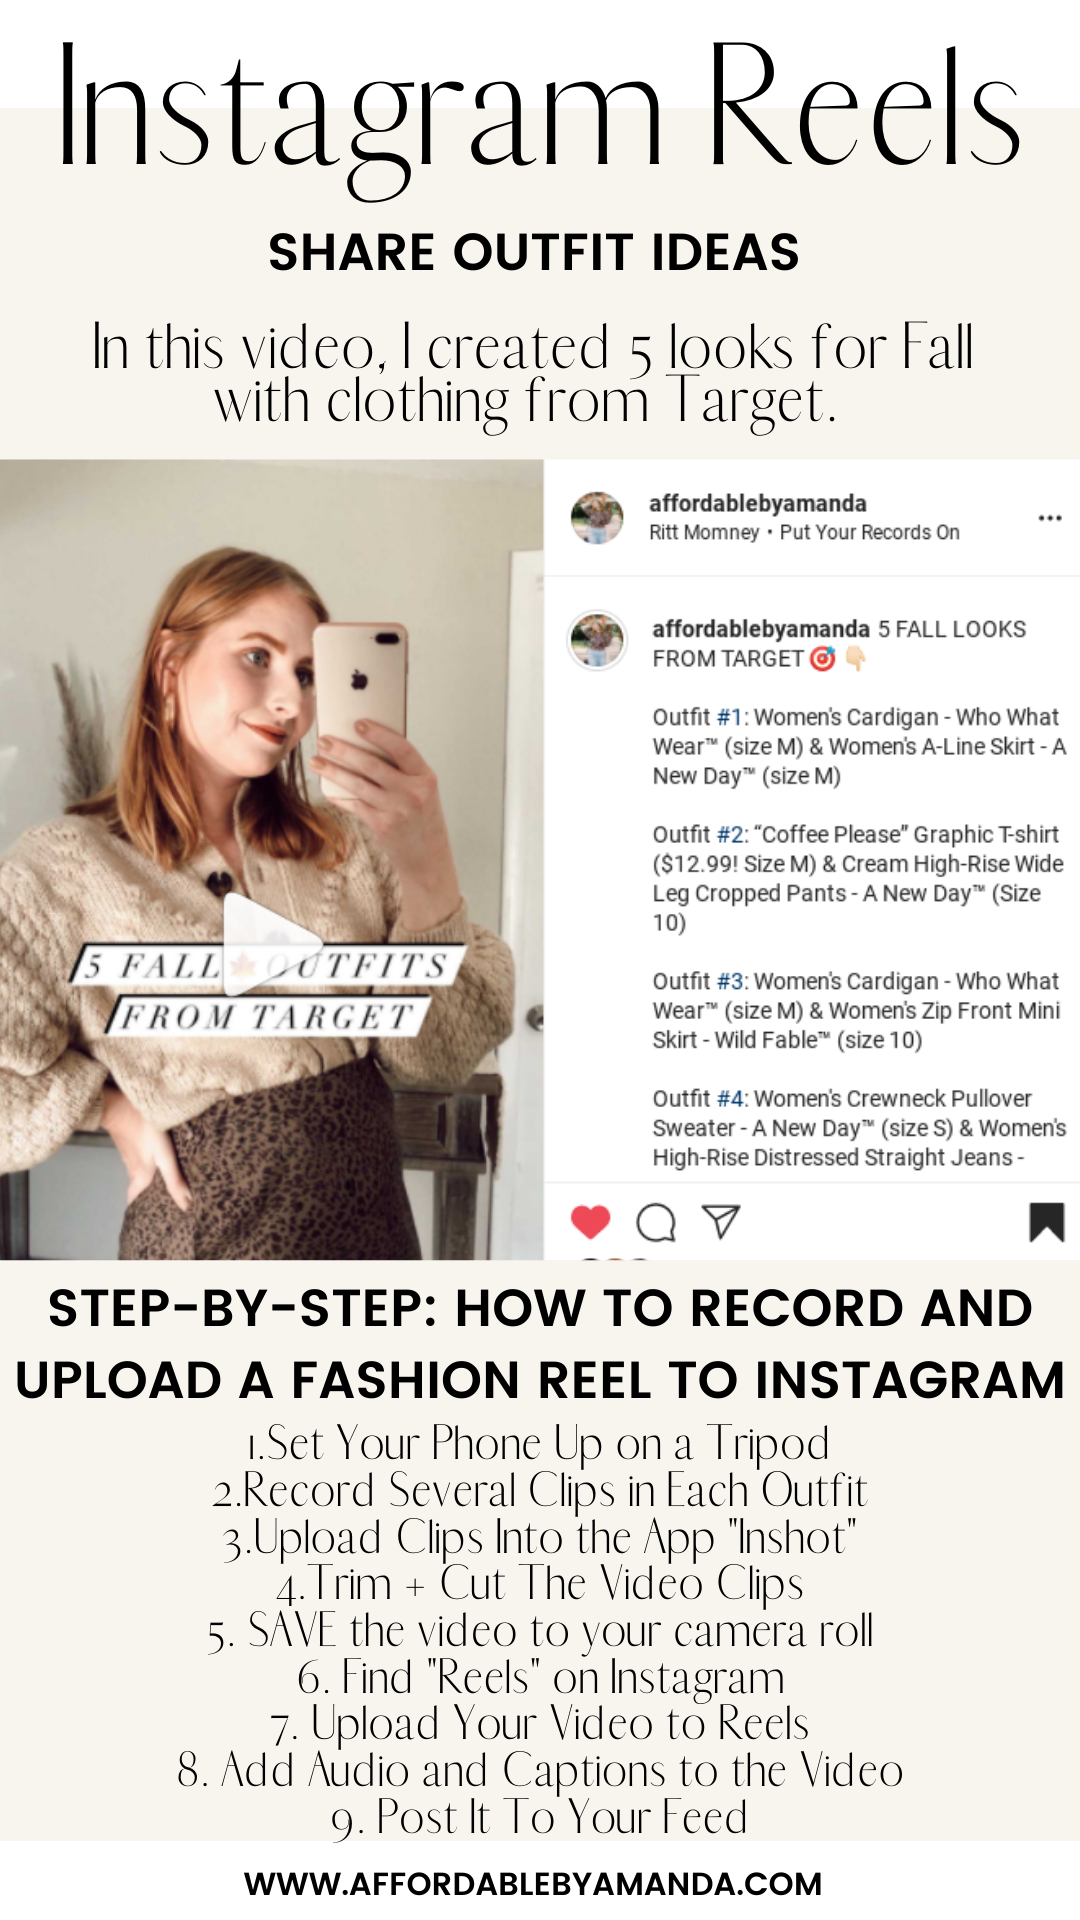 More Tips for Creating Viral Instagram Reels - Affordable by Amanda - Blogging Tips in 2021